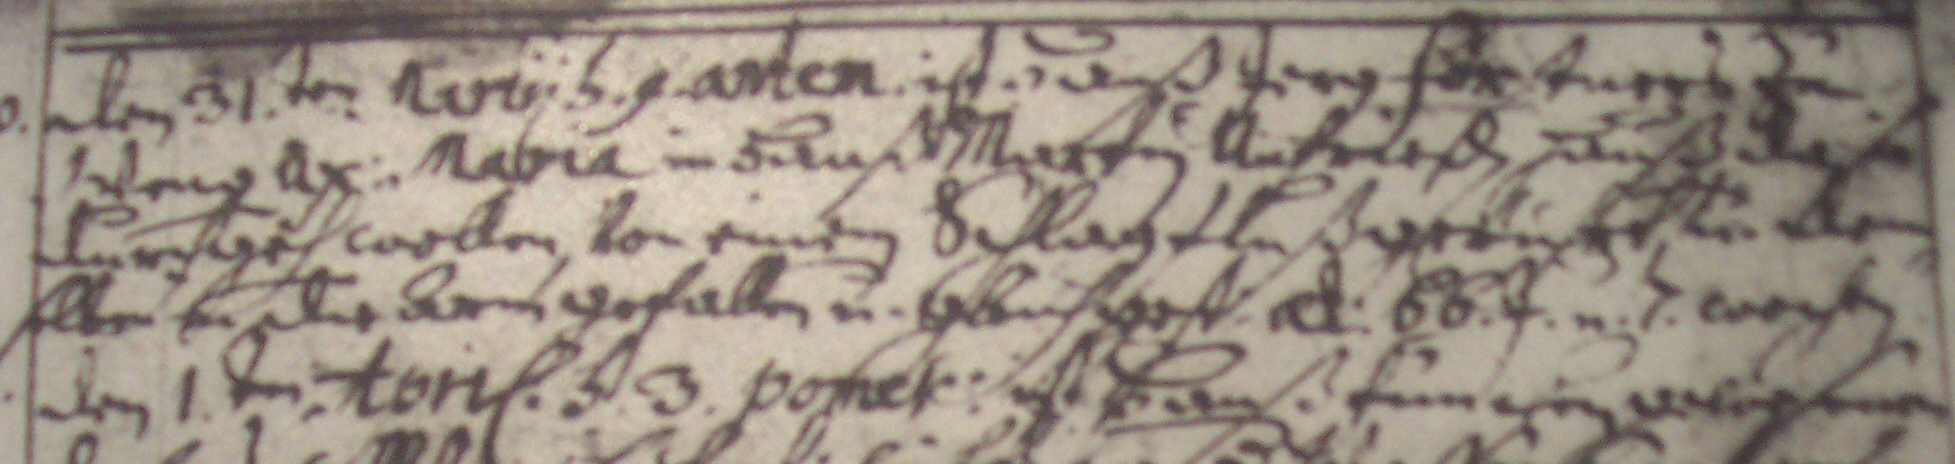 MariaFörstener geb. Unfried + 1733